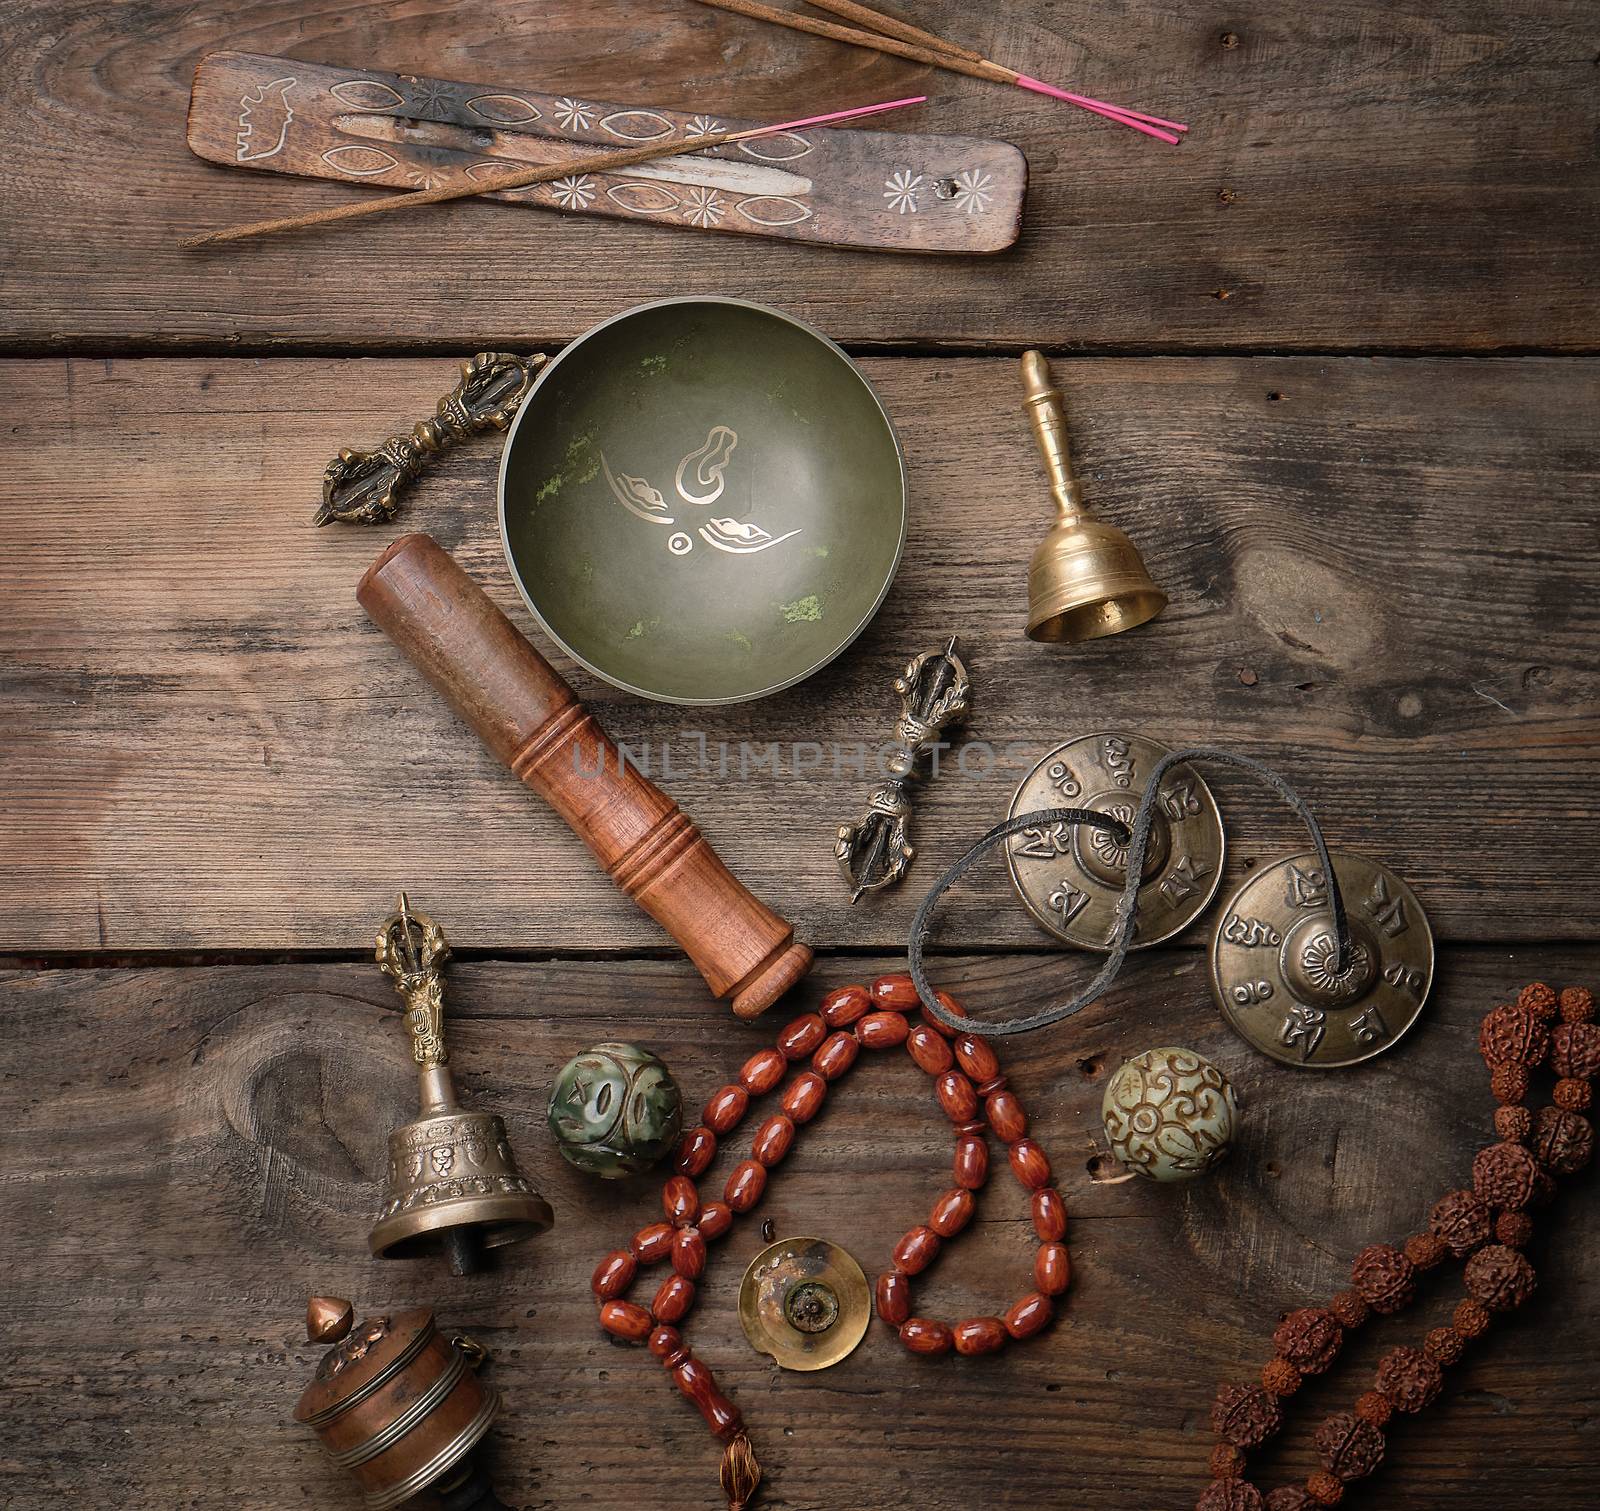 Copper singing bowl, prayer beads, prayer drum and other Tibetan by ndanko